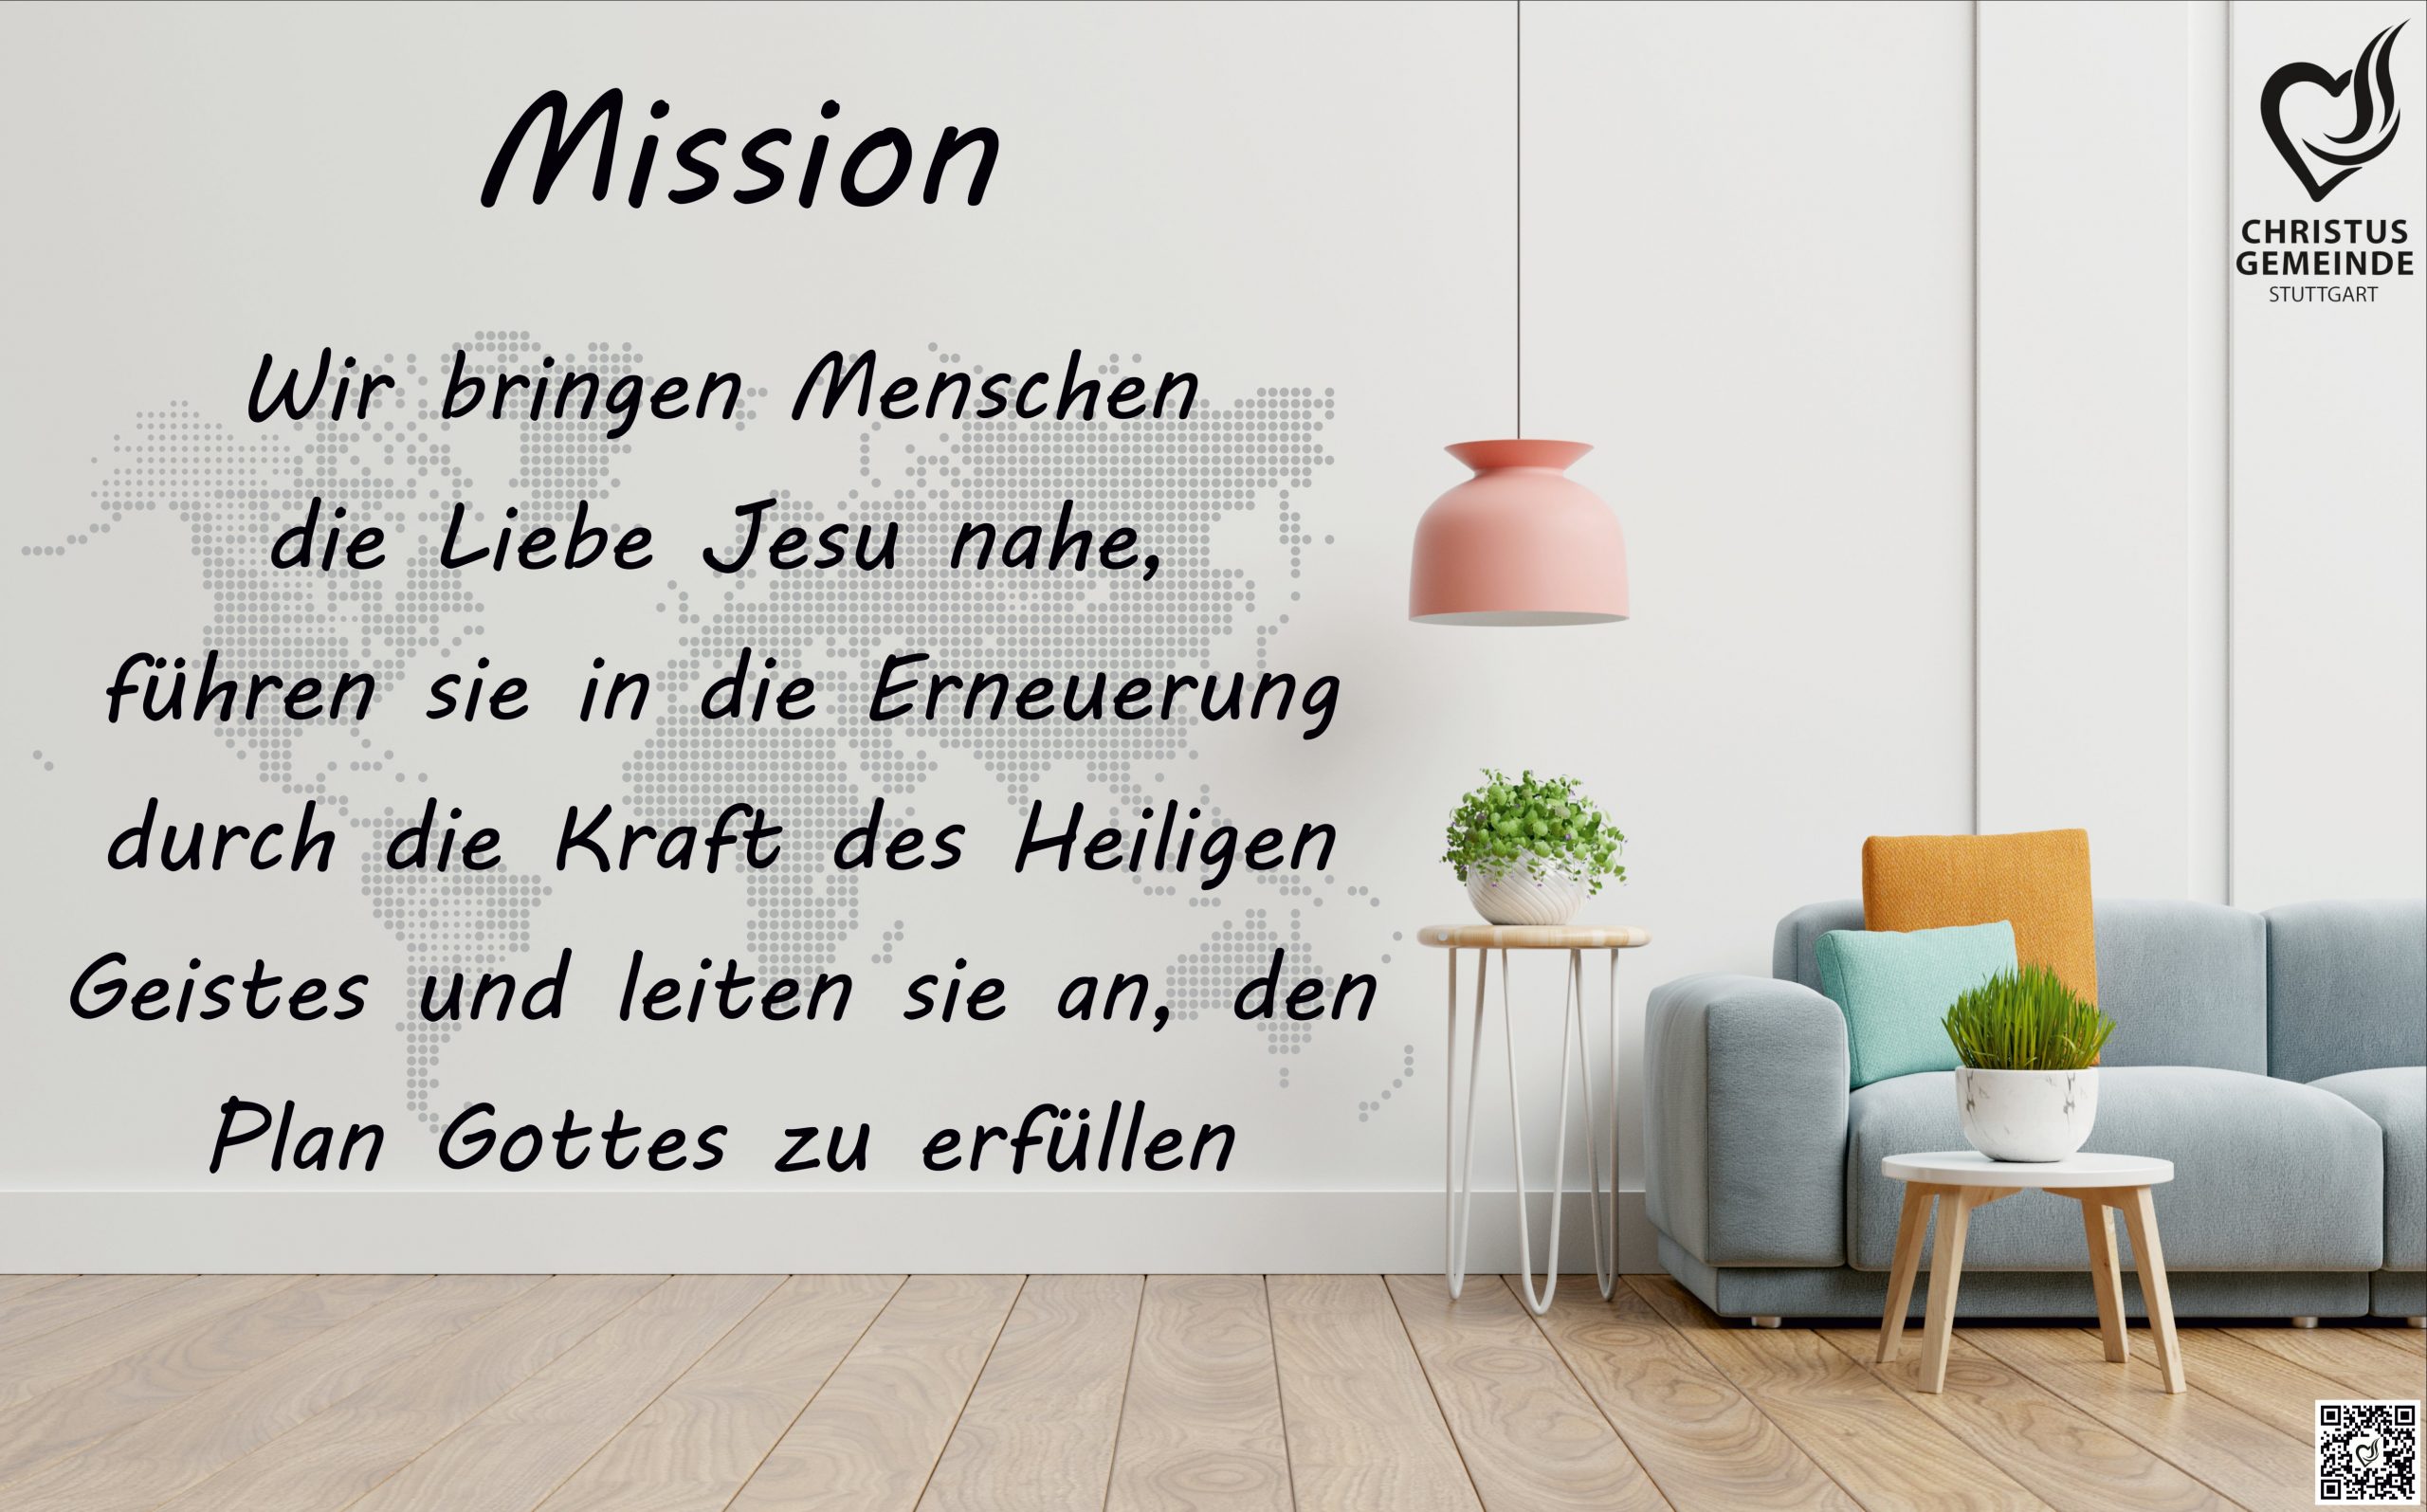 Mission CG Stuttgart